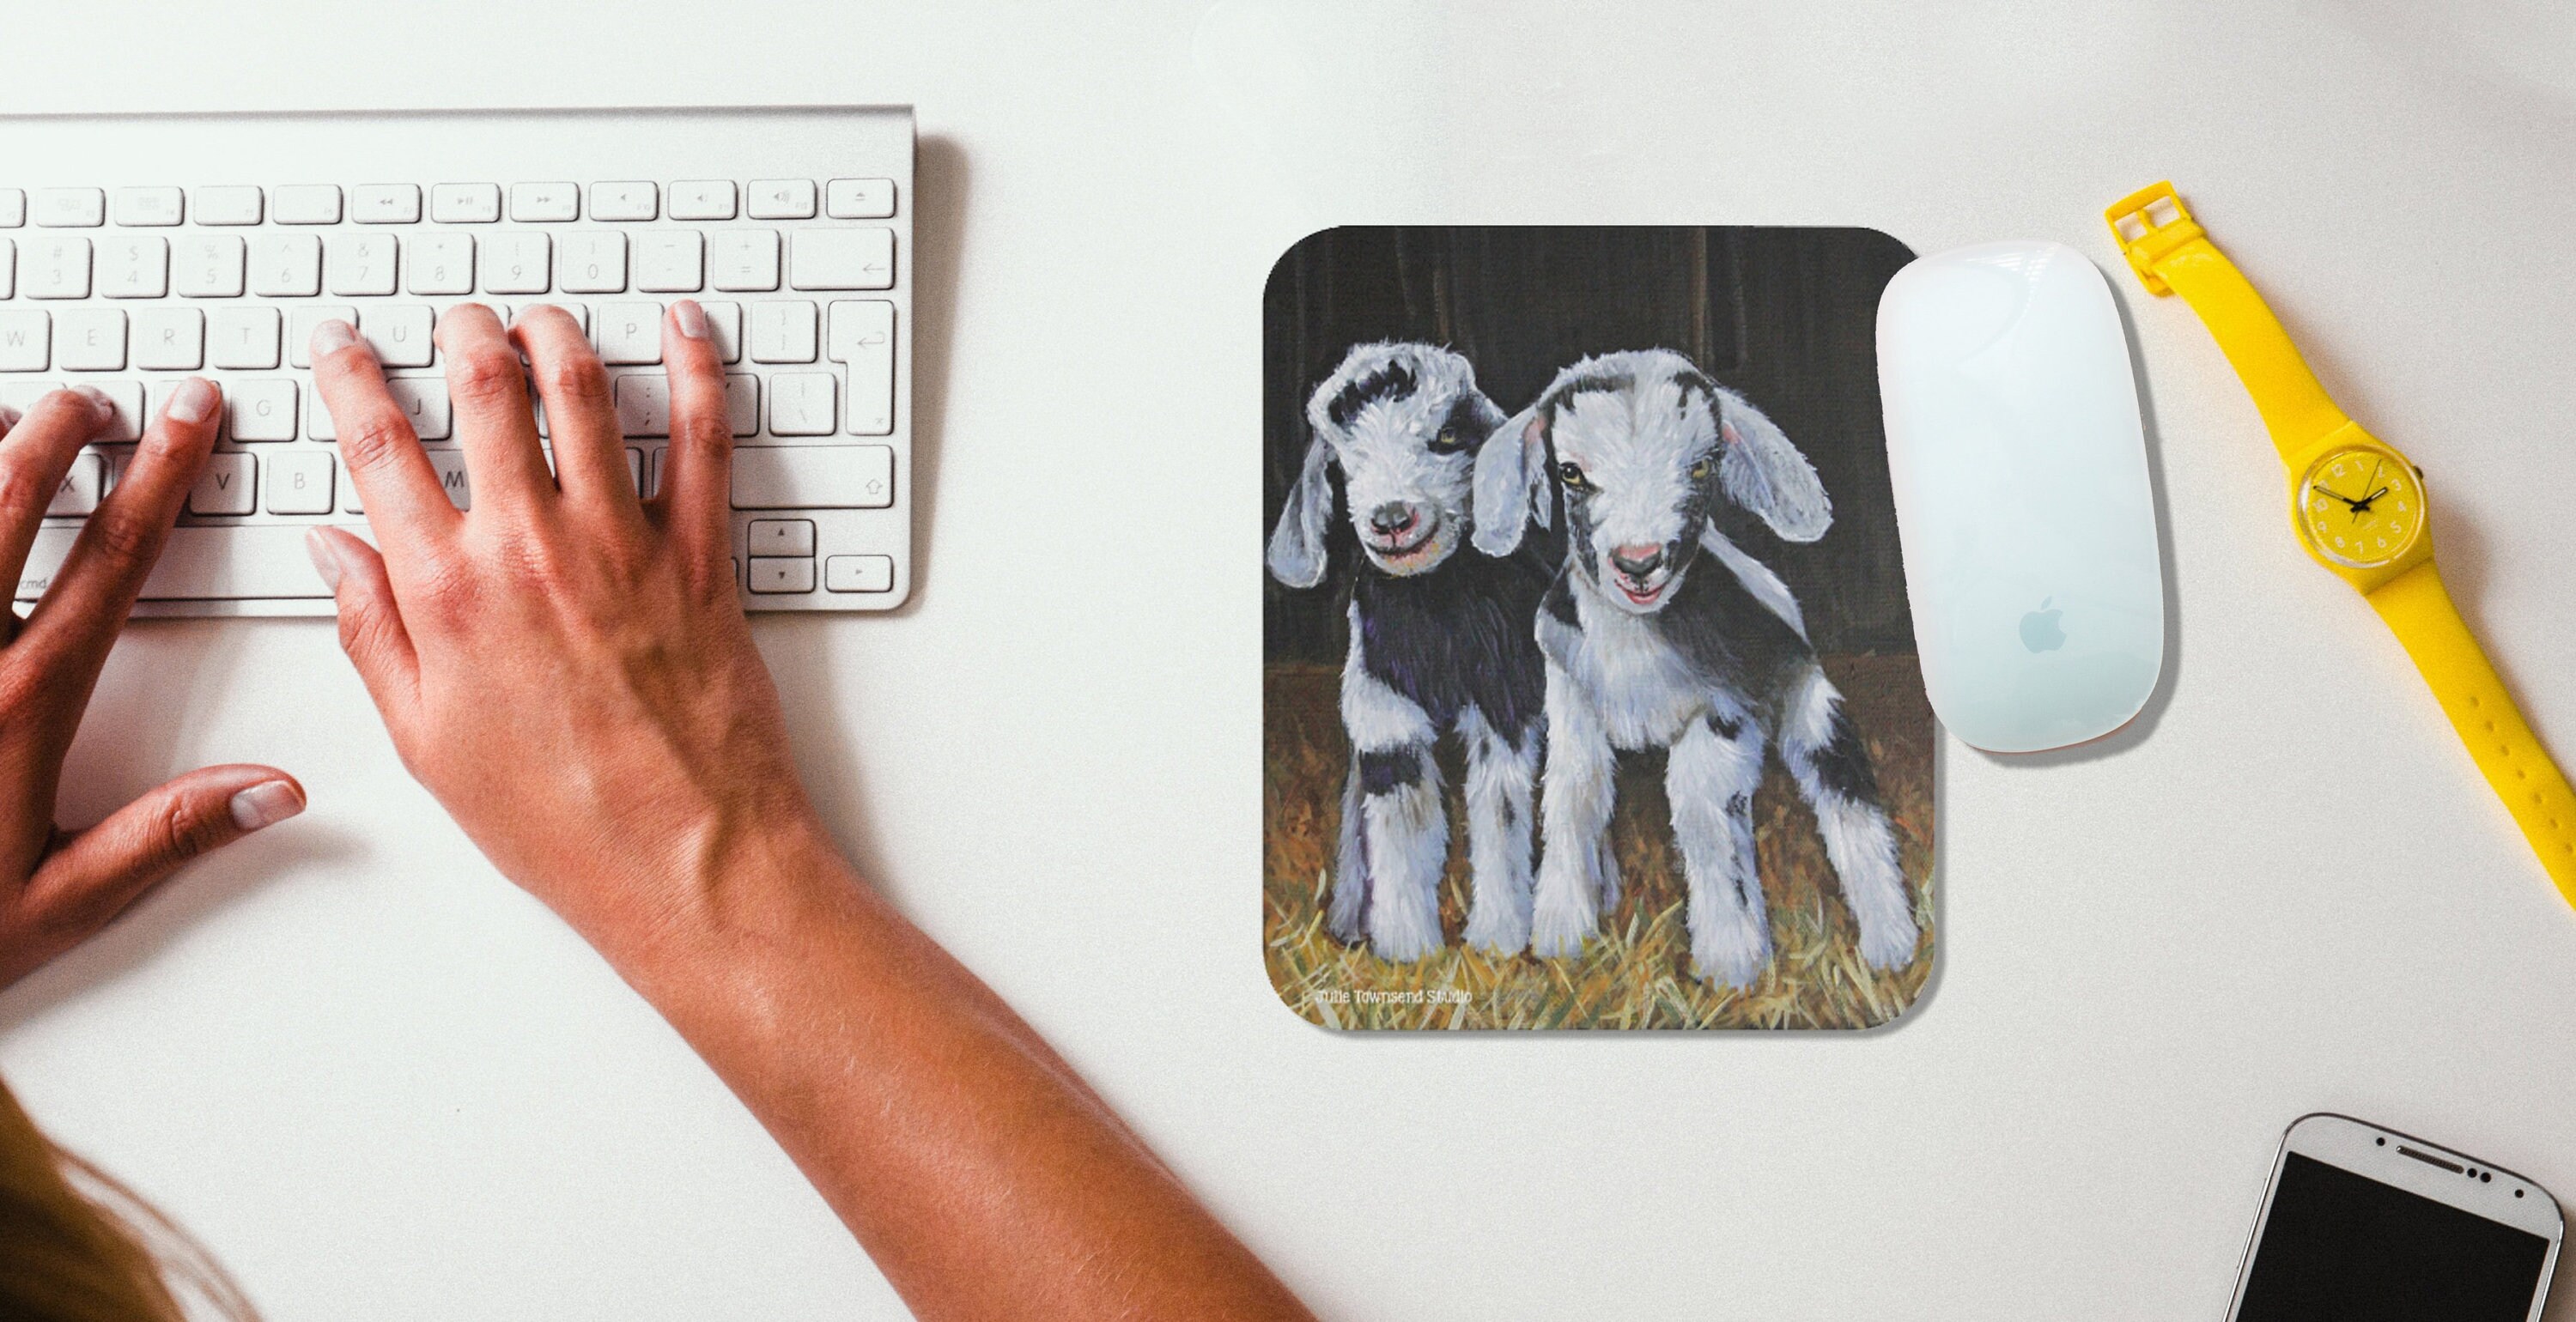 Goat Mousepad baby goat mouse pad goat office farmhouse | Etsy